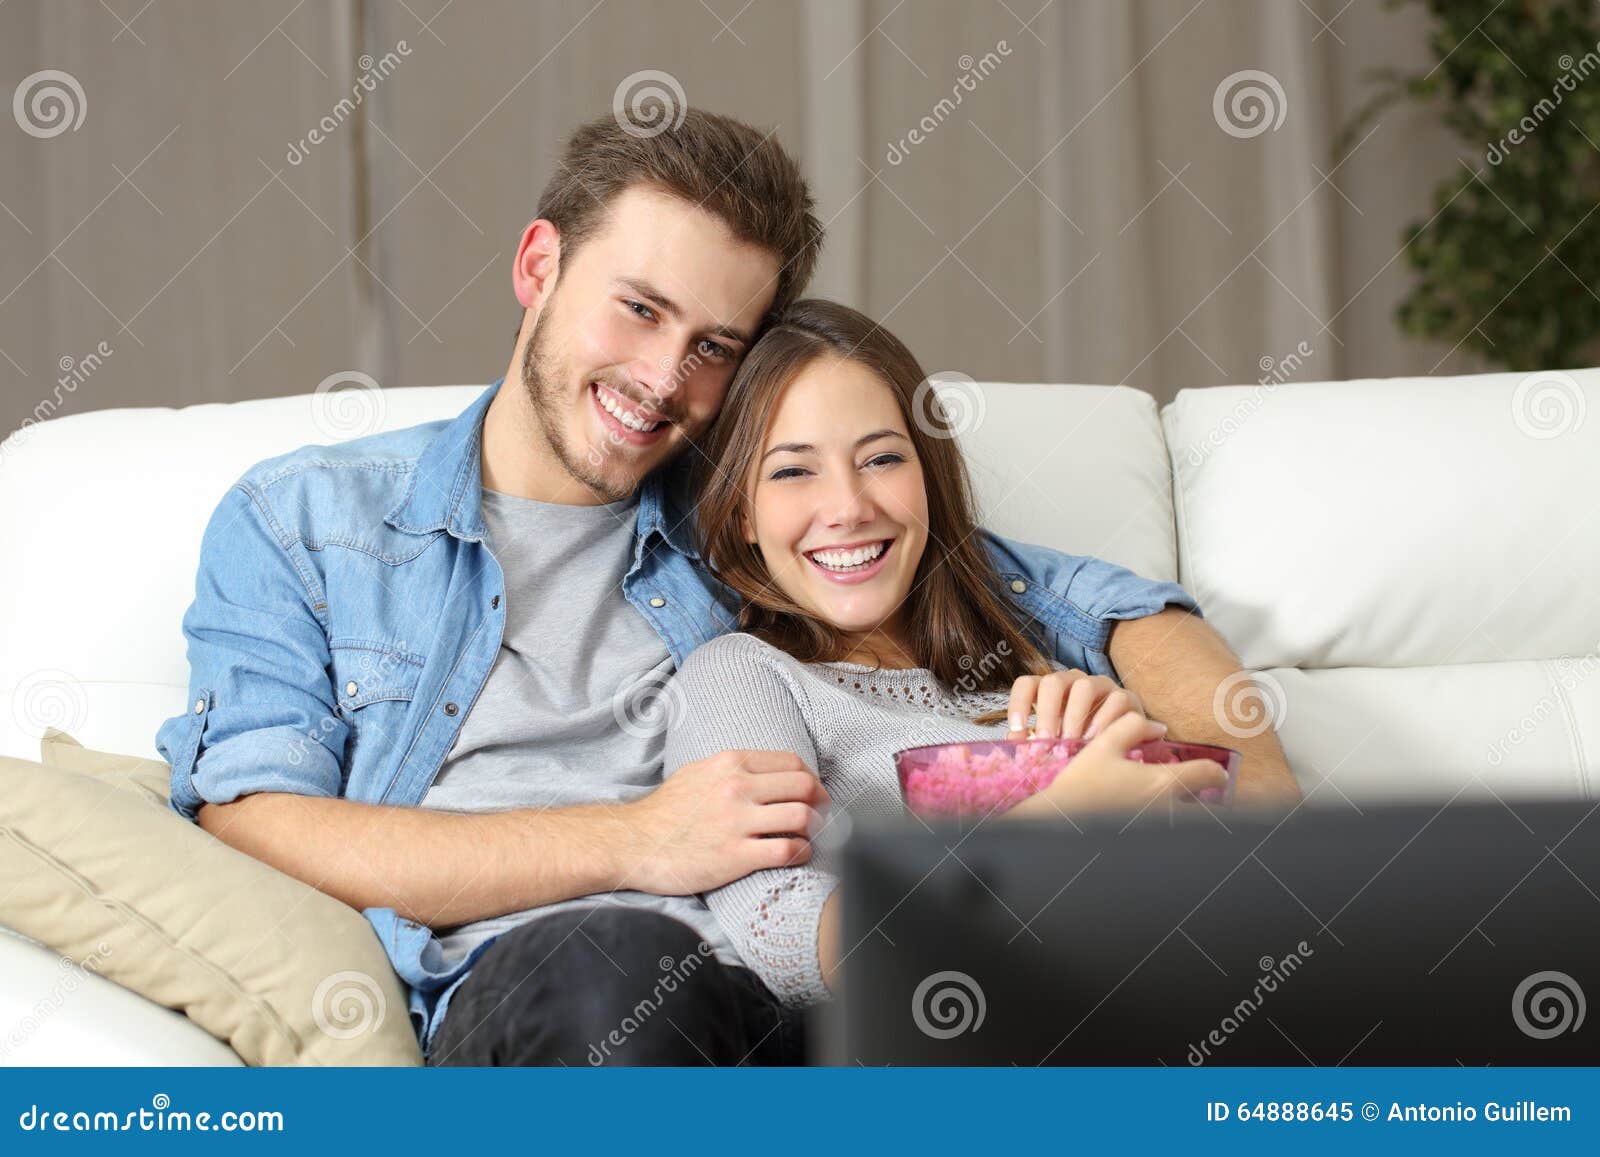 happy couple watching movie on tv